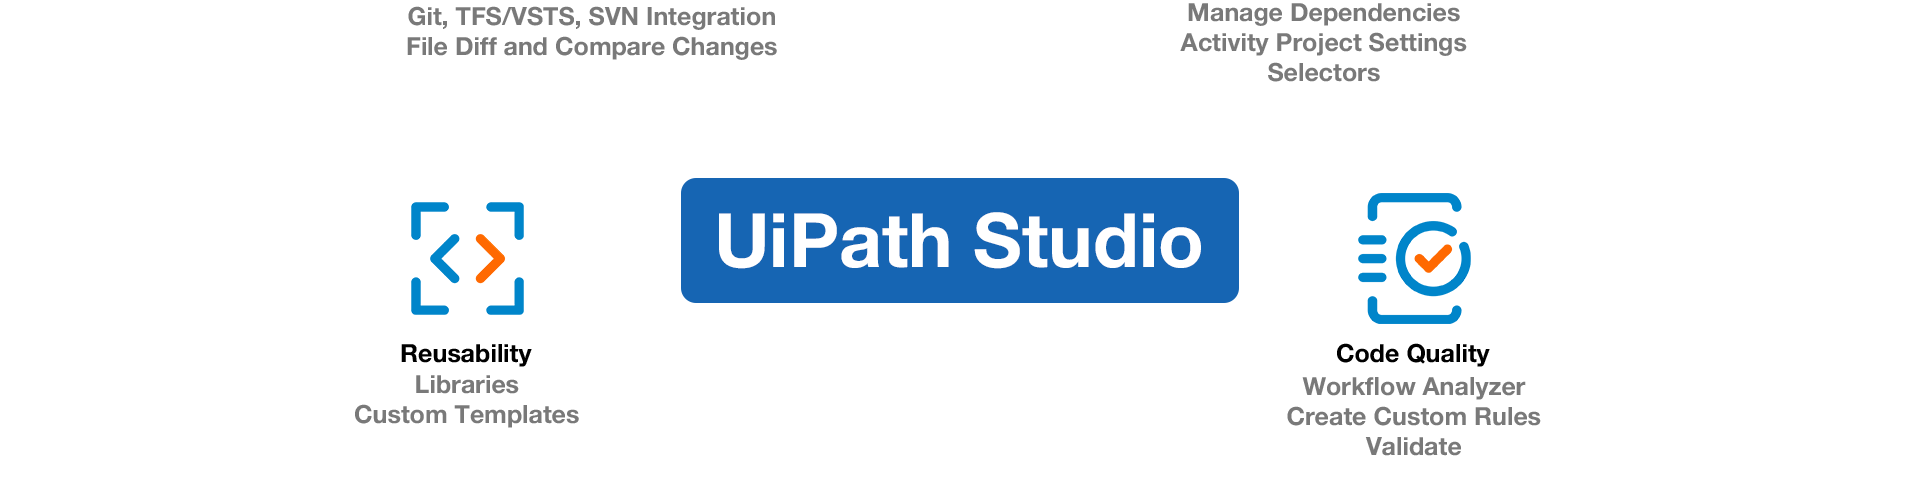 UI Path Studio